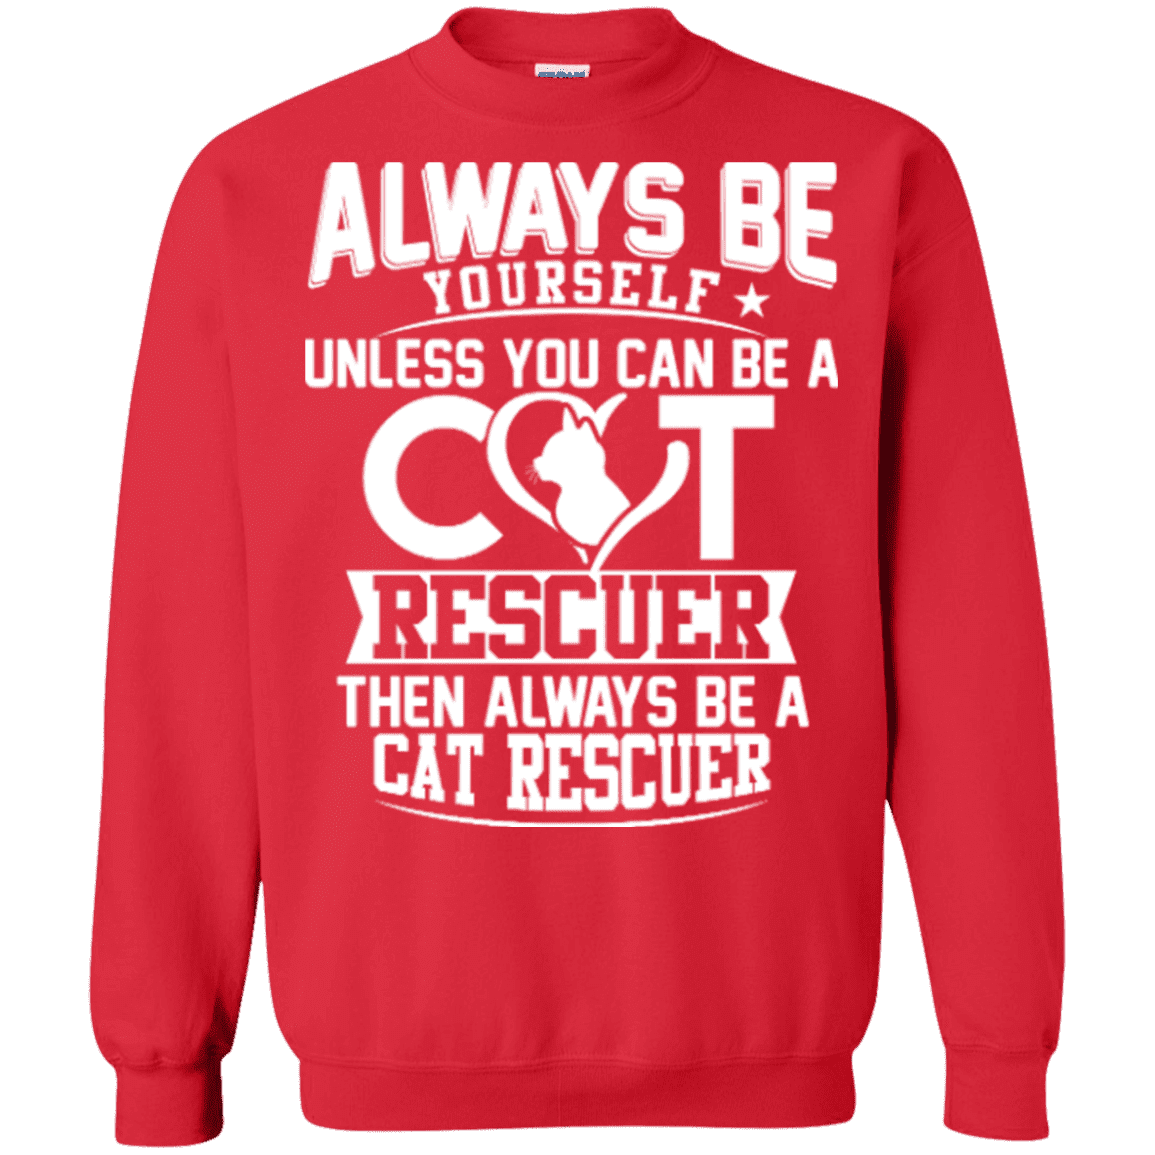 Always Be A Cat Rescuer - Sweatshirt.